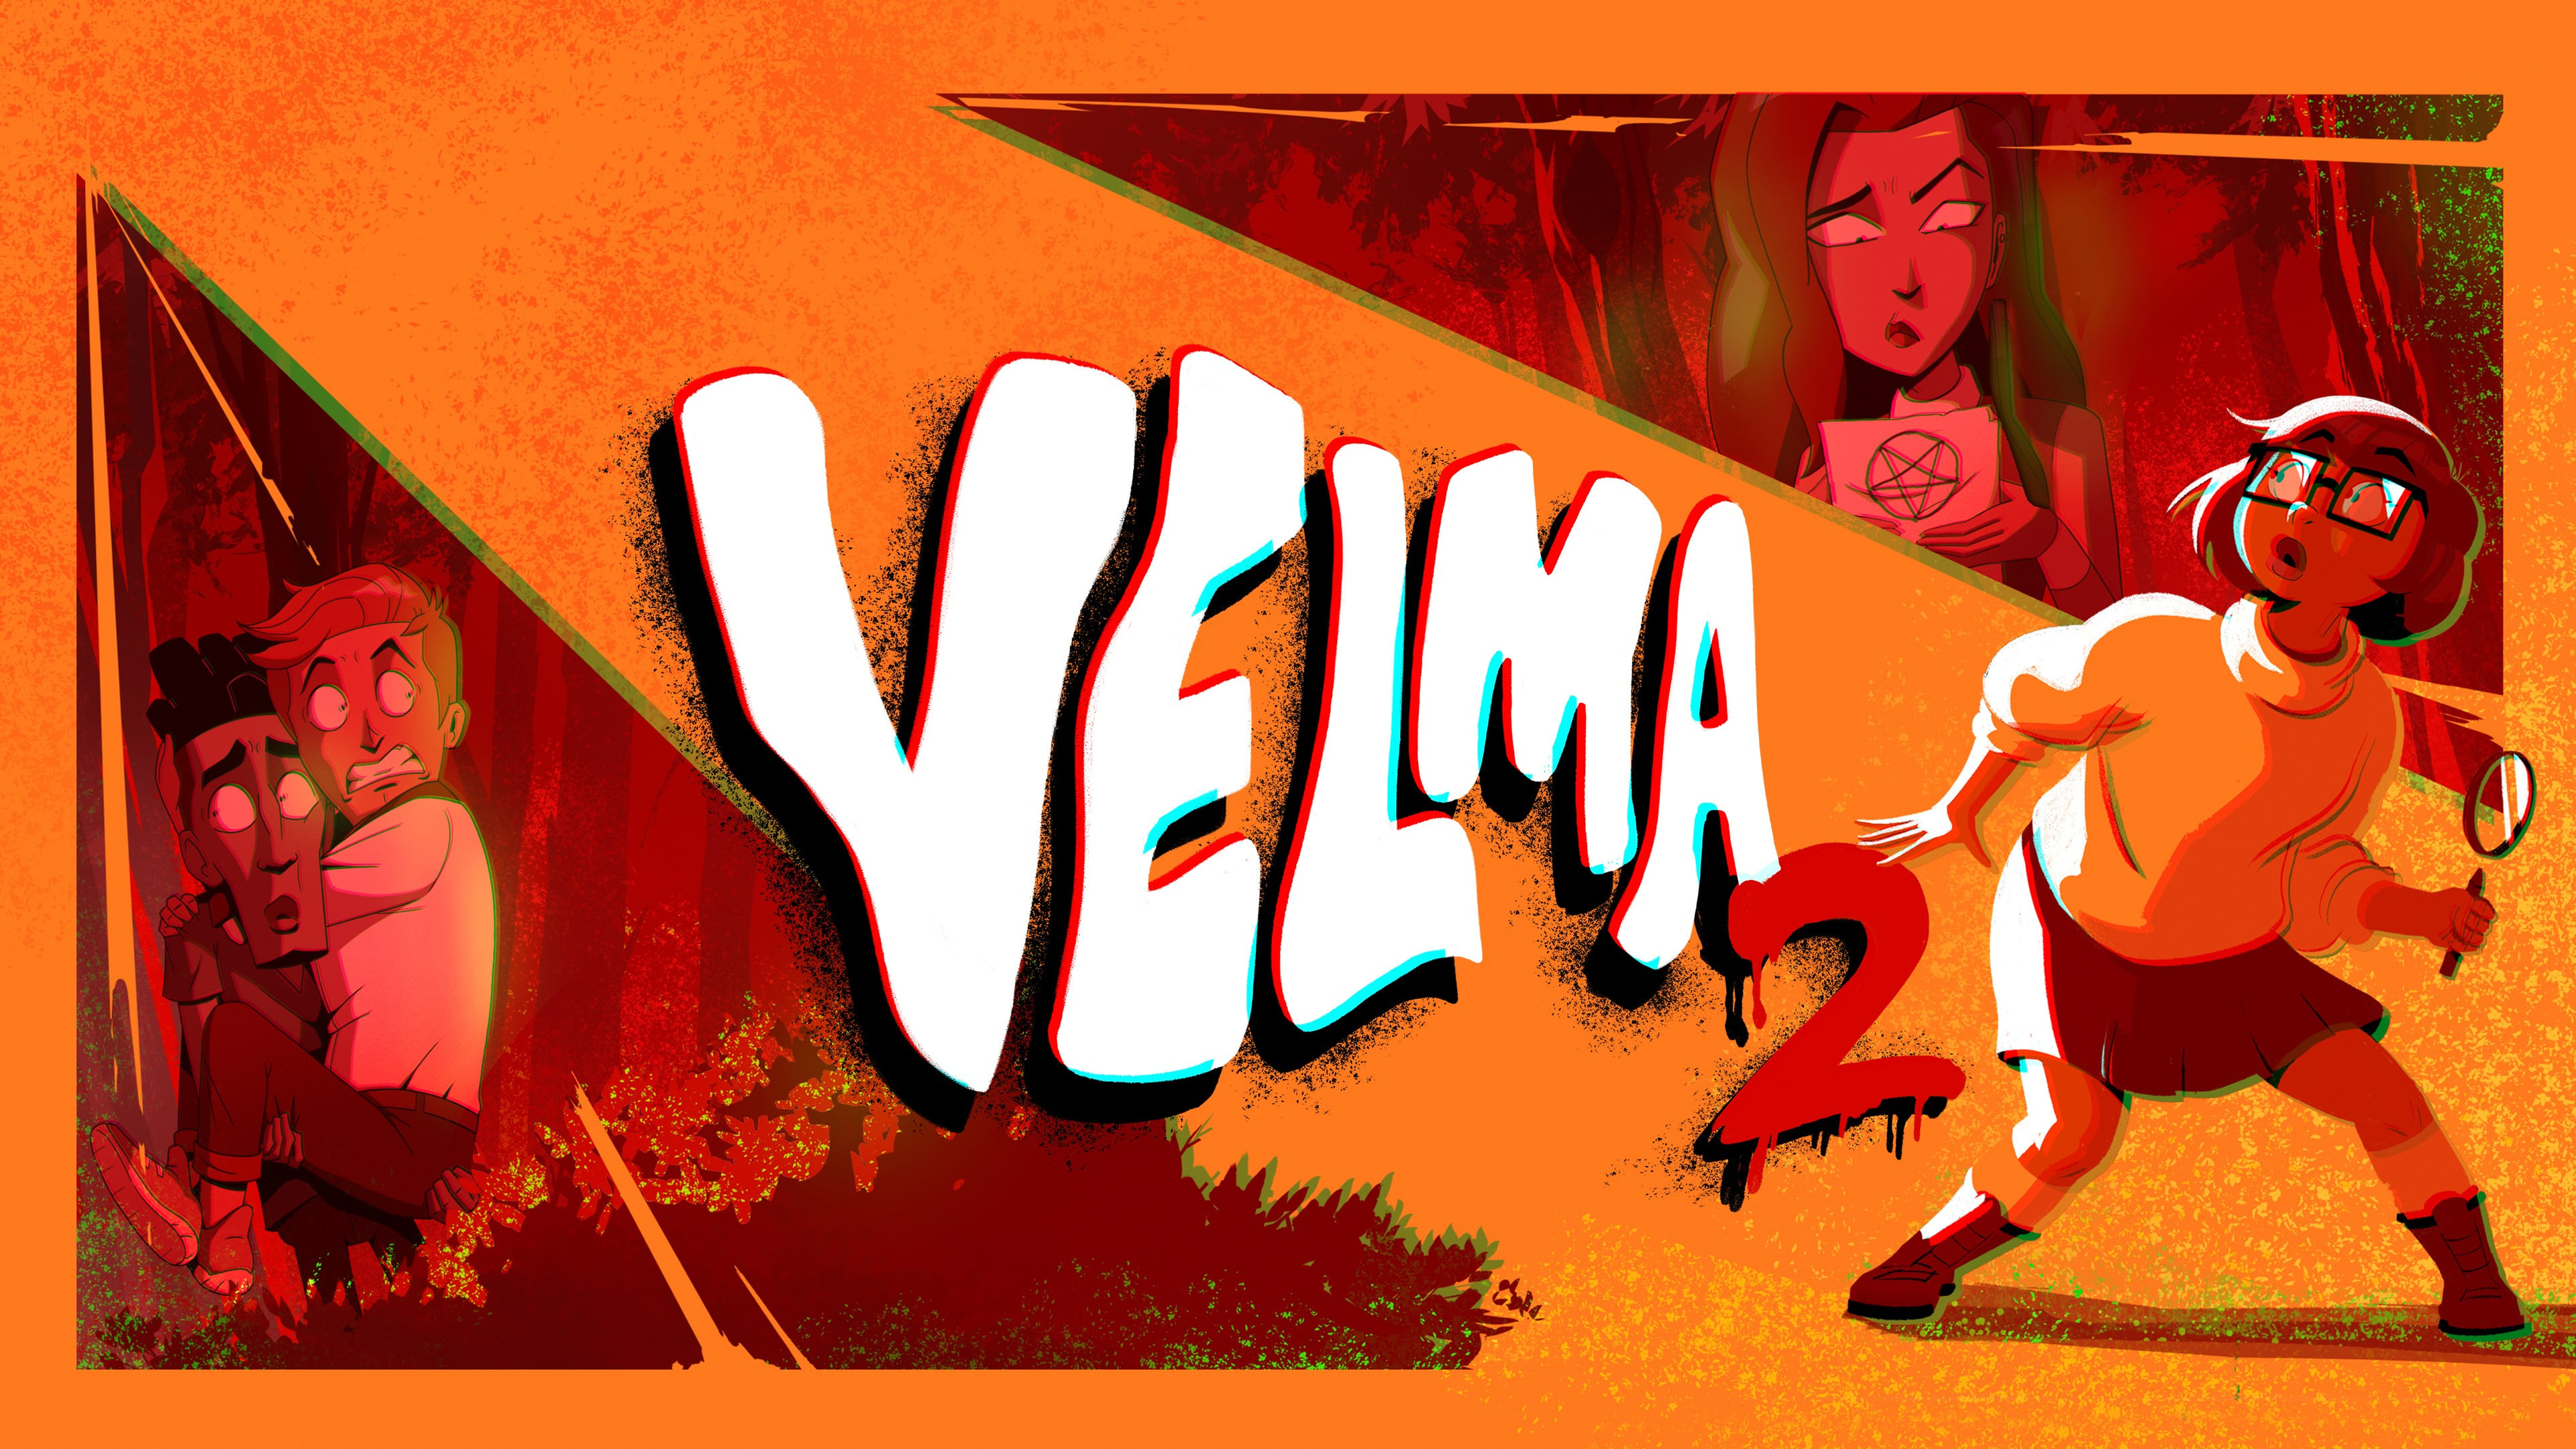 Velma - Season 1 Episode 10